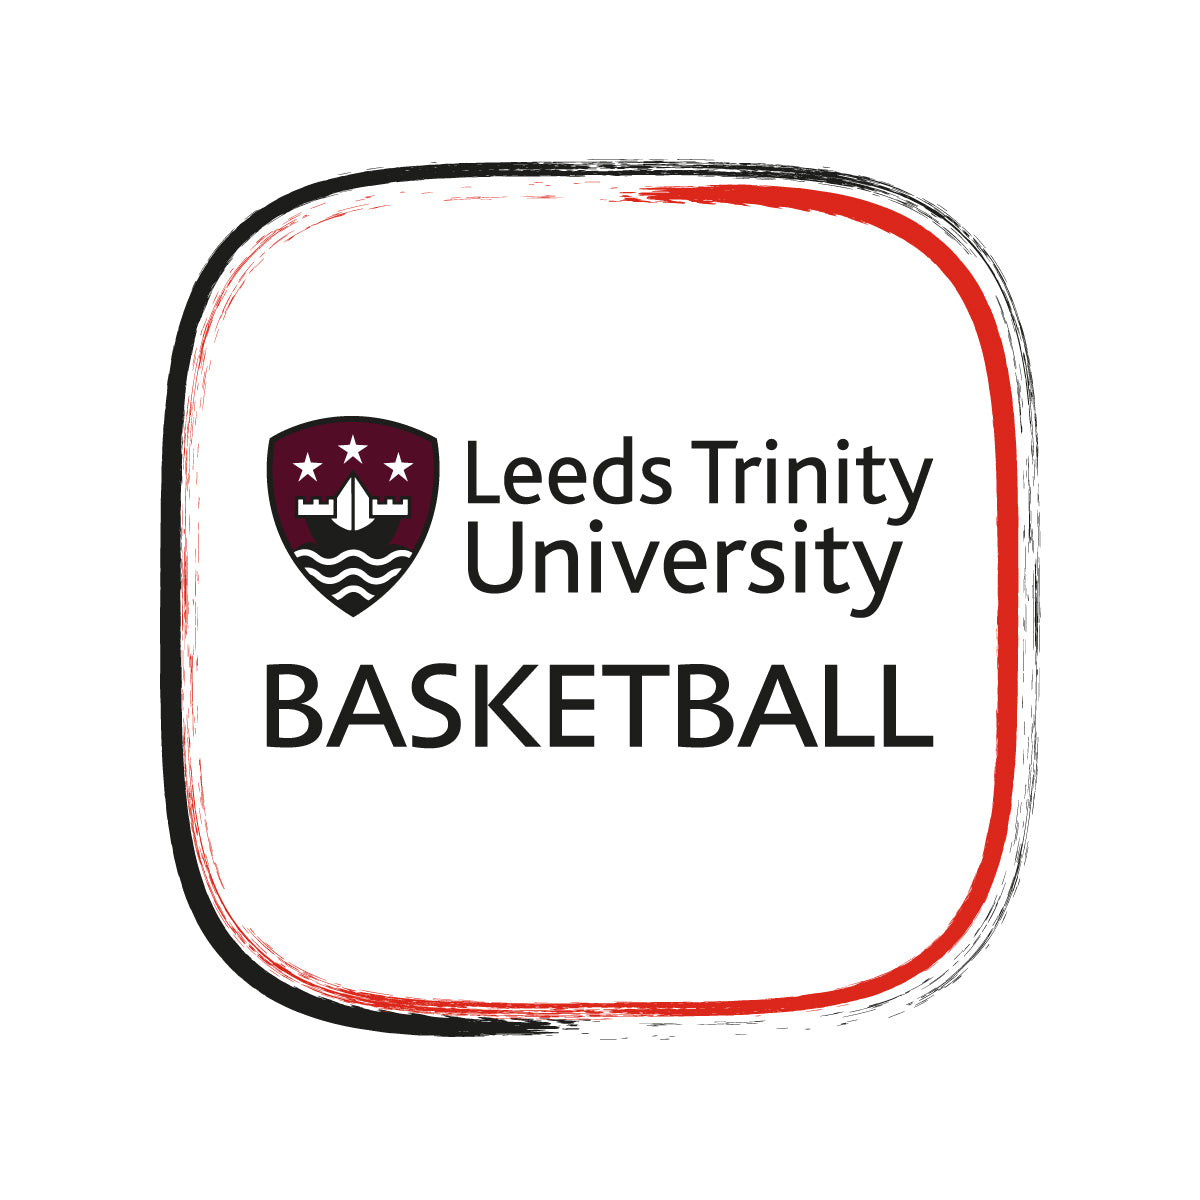 Leeds Trinity University Basketball